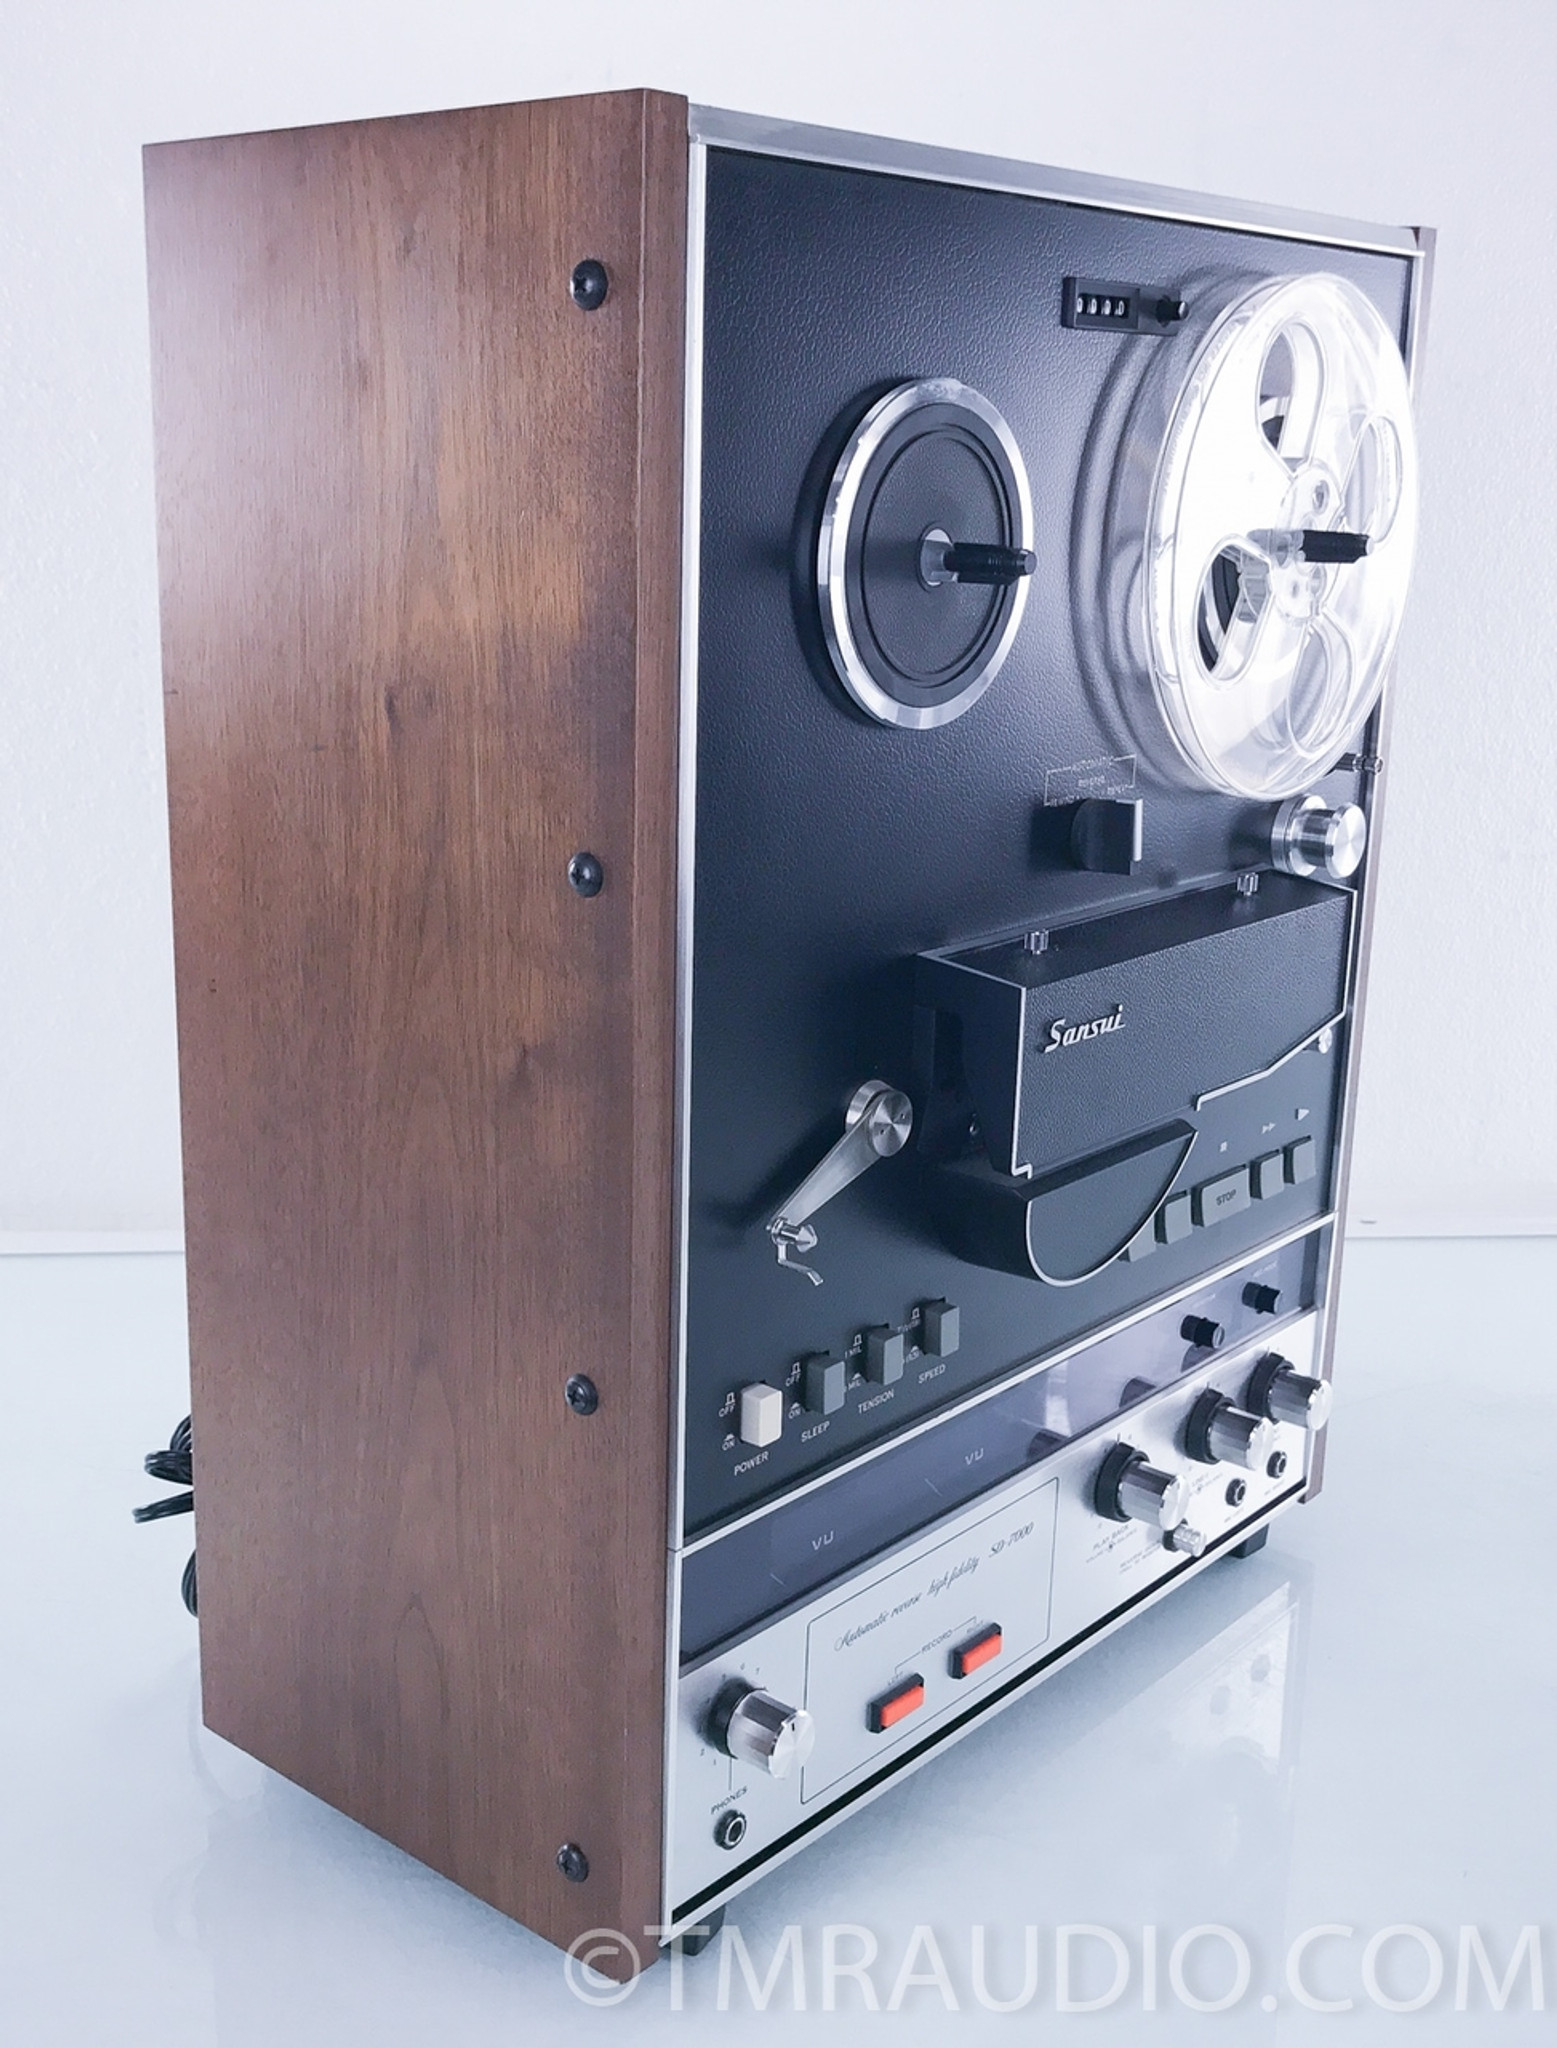 Sansui SD-7000 Vintage Reel to Reel Tape Recorder / Player